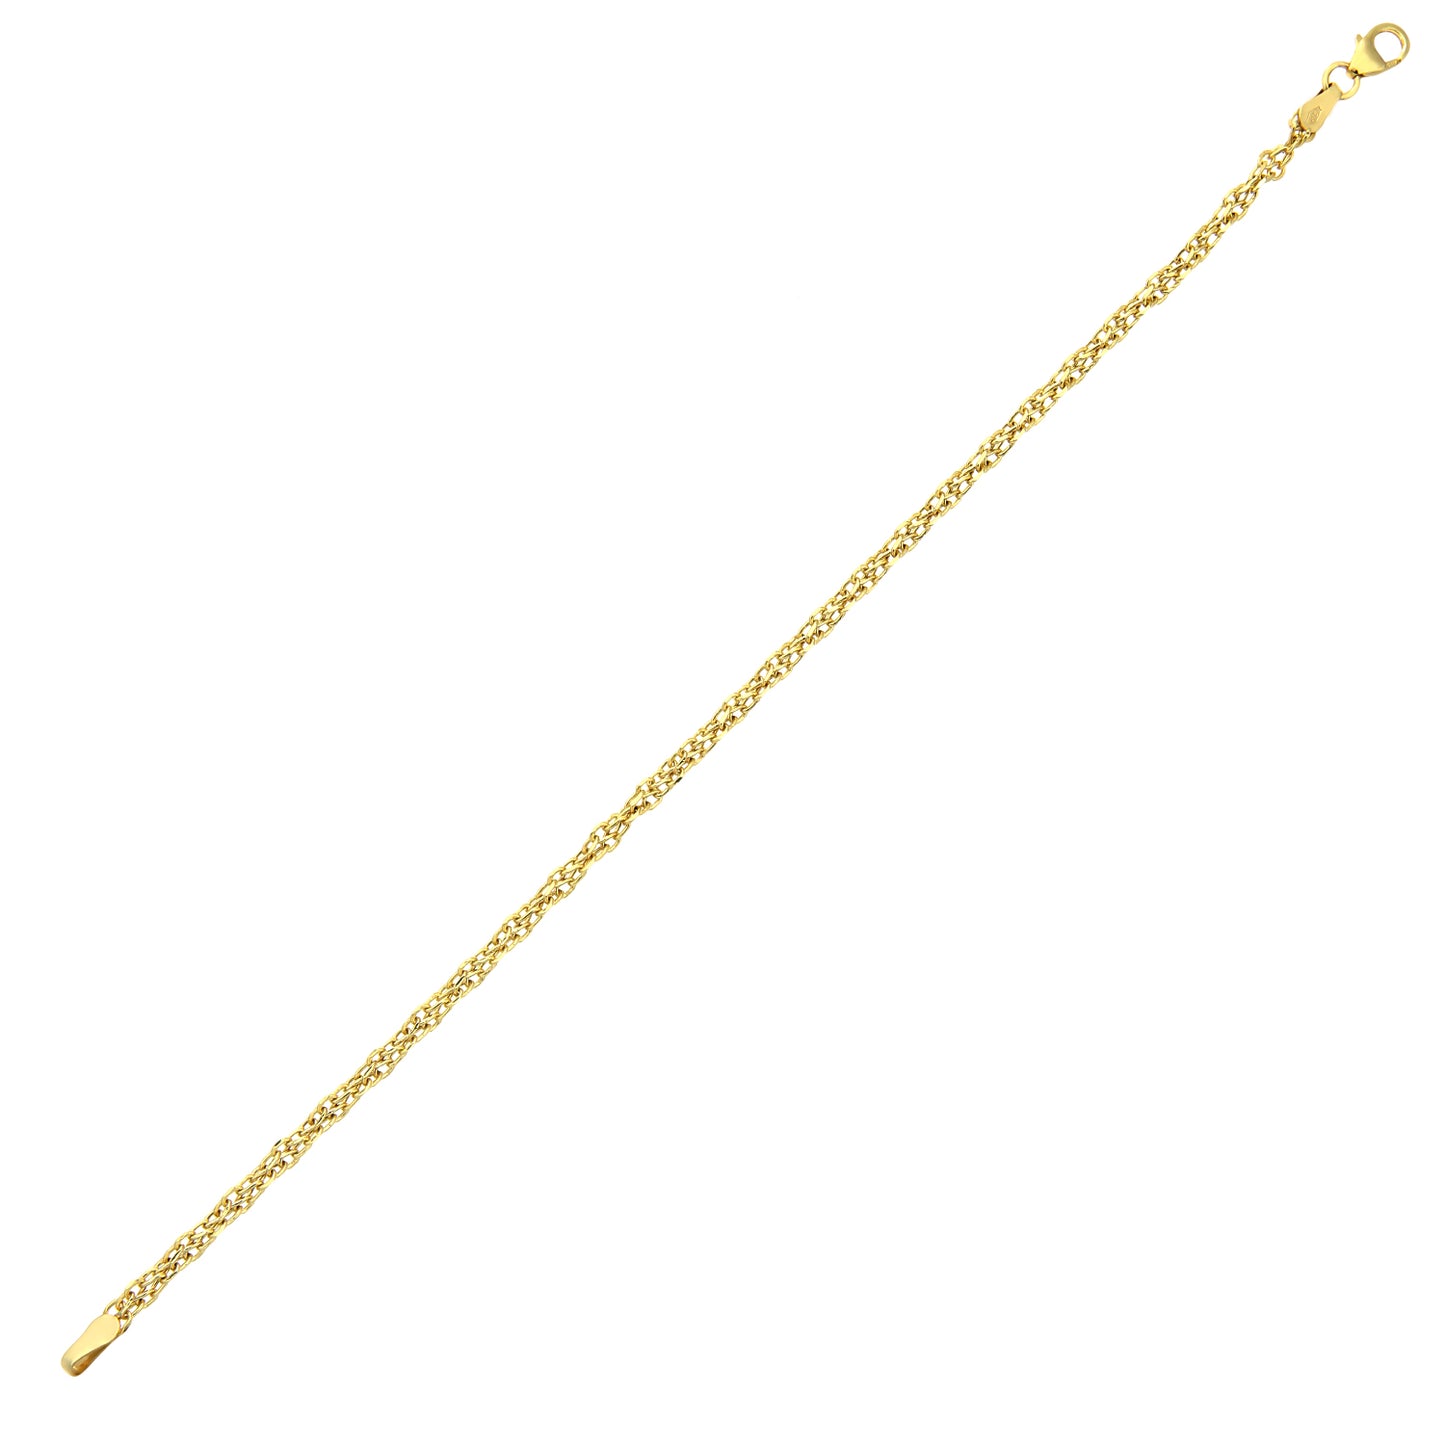 9ct Gold  Figure of 8 Infinity Link Chain Bracelet 3mm 7.5 inch - 050AXLASPD7.5